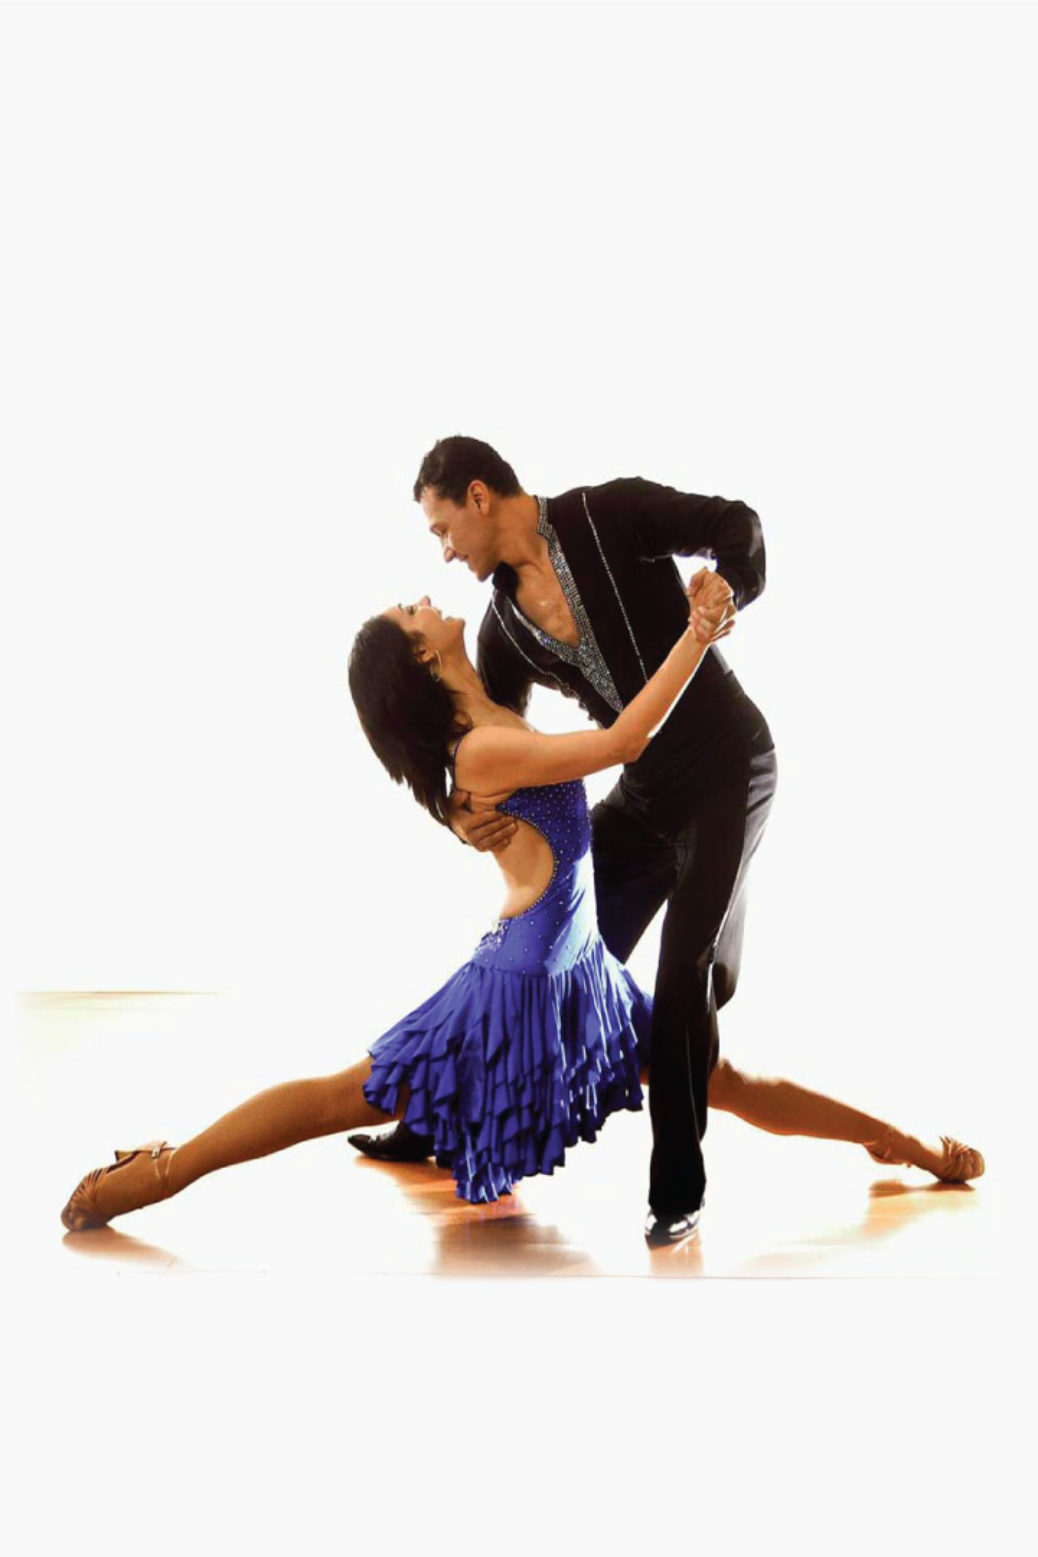 The Latin dance of love